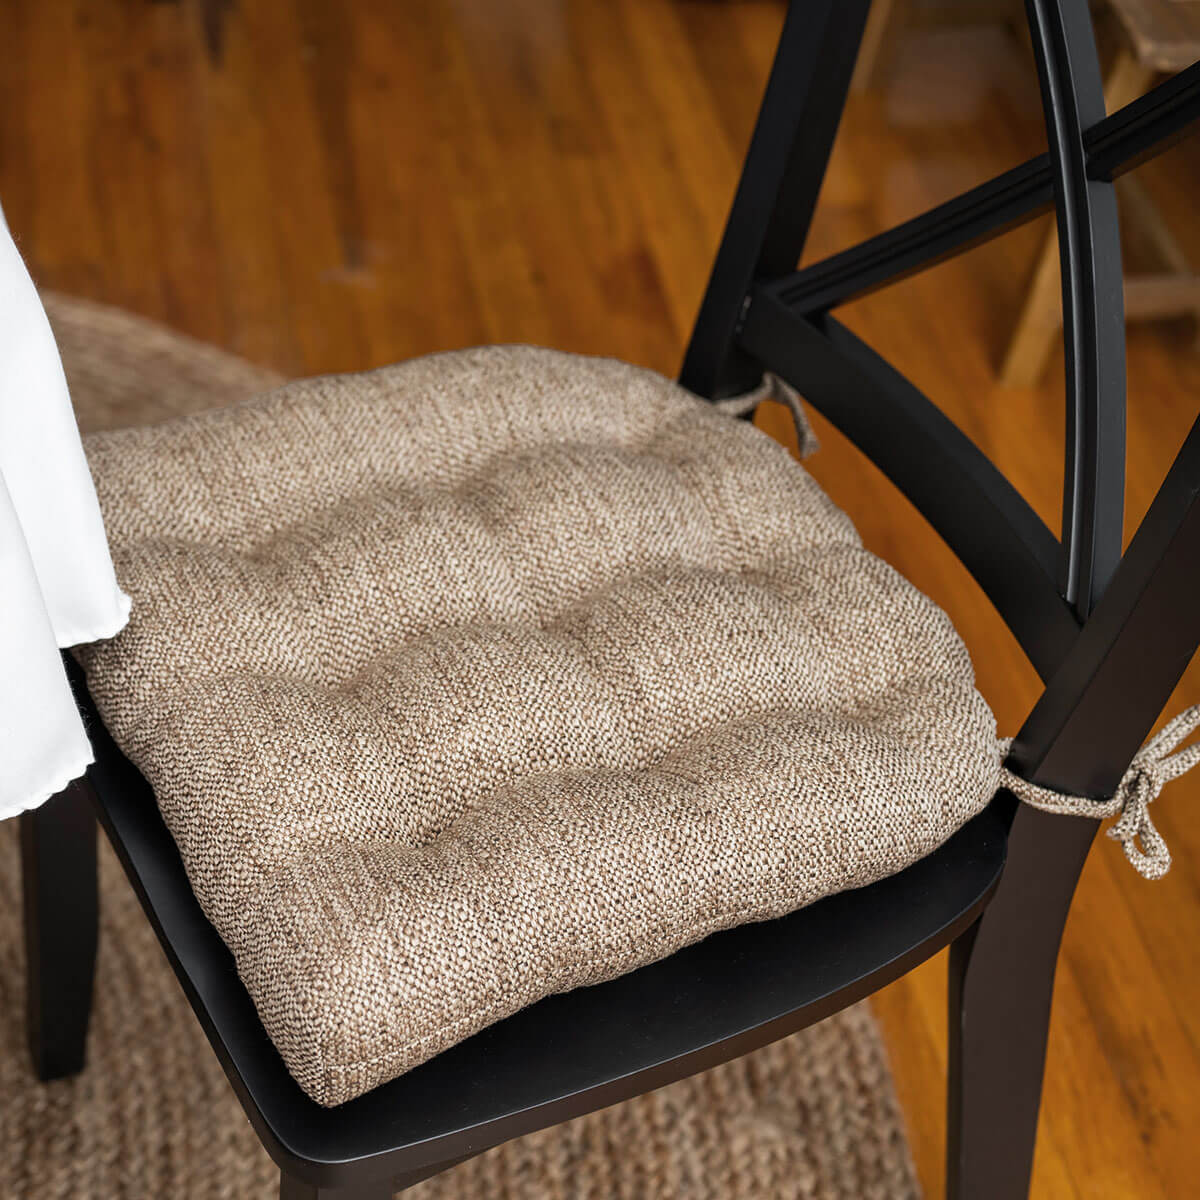 Micro-Suede Camel Rocking Chair Cushions - Latex Foam Fill